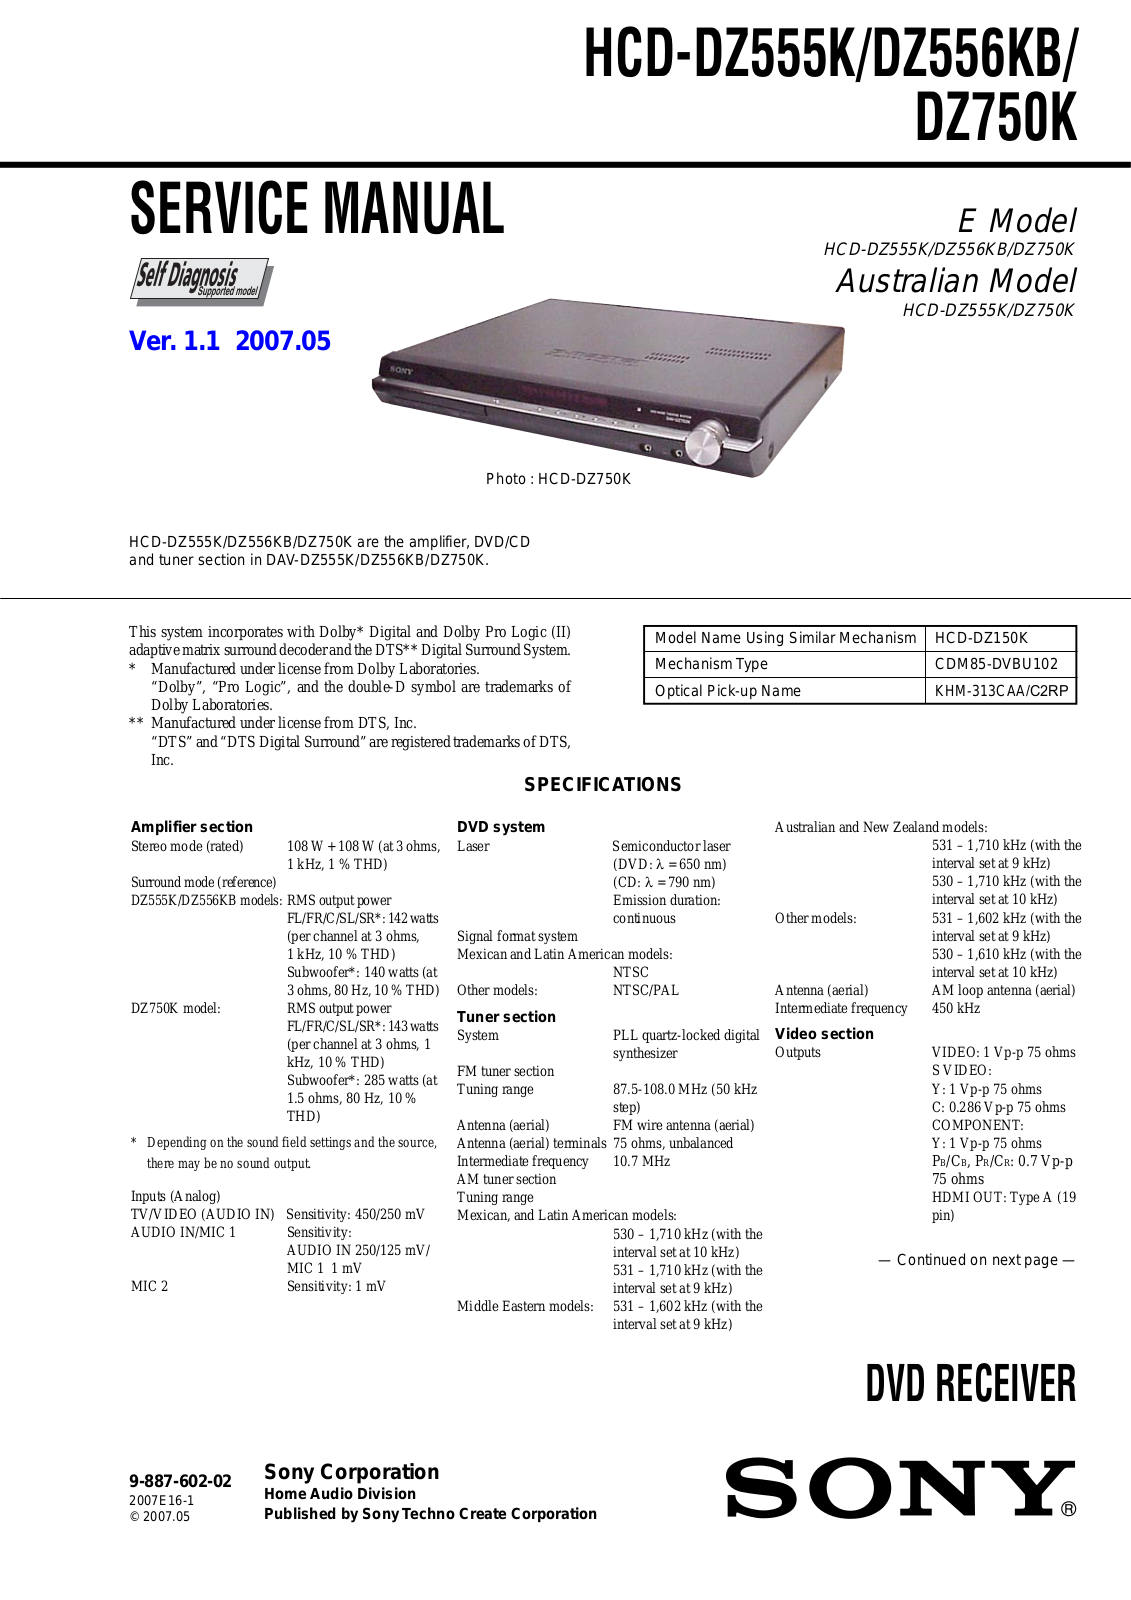 Sony HCD-DZ556KB, HCD-DZ750K Service Manual